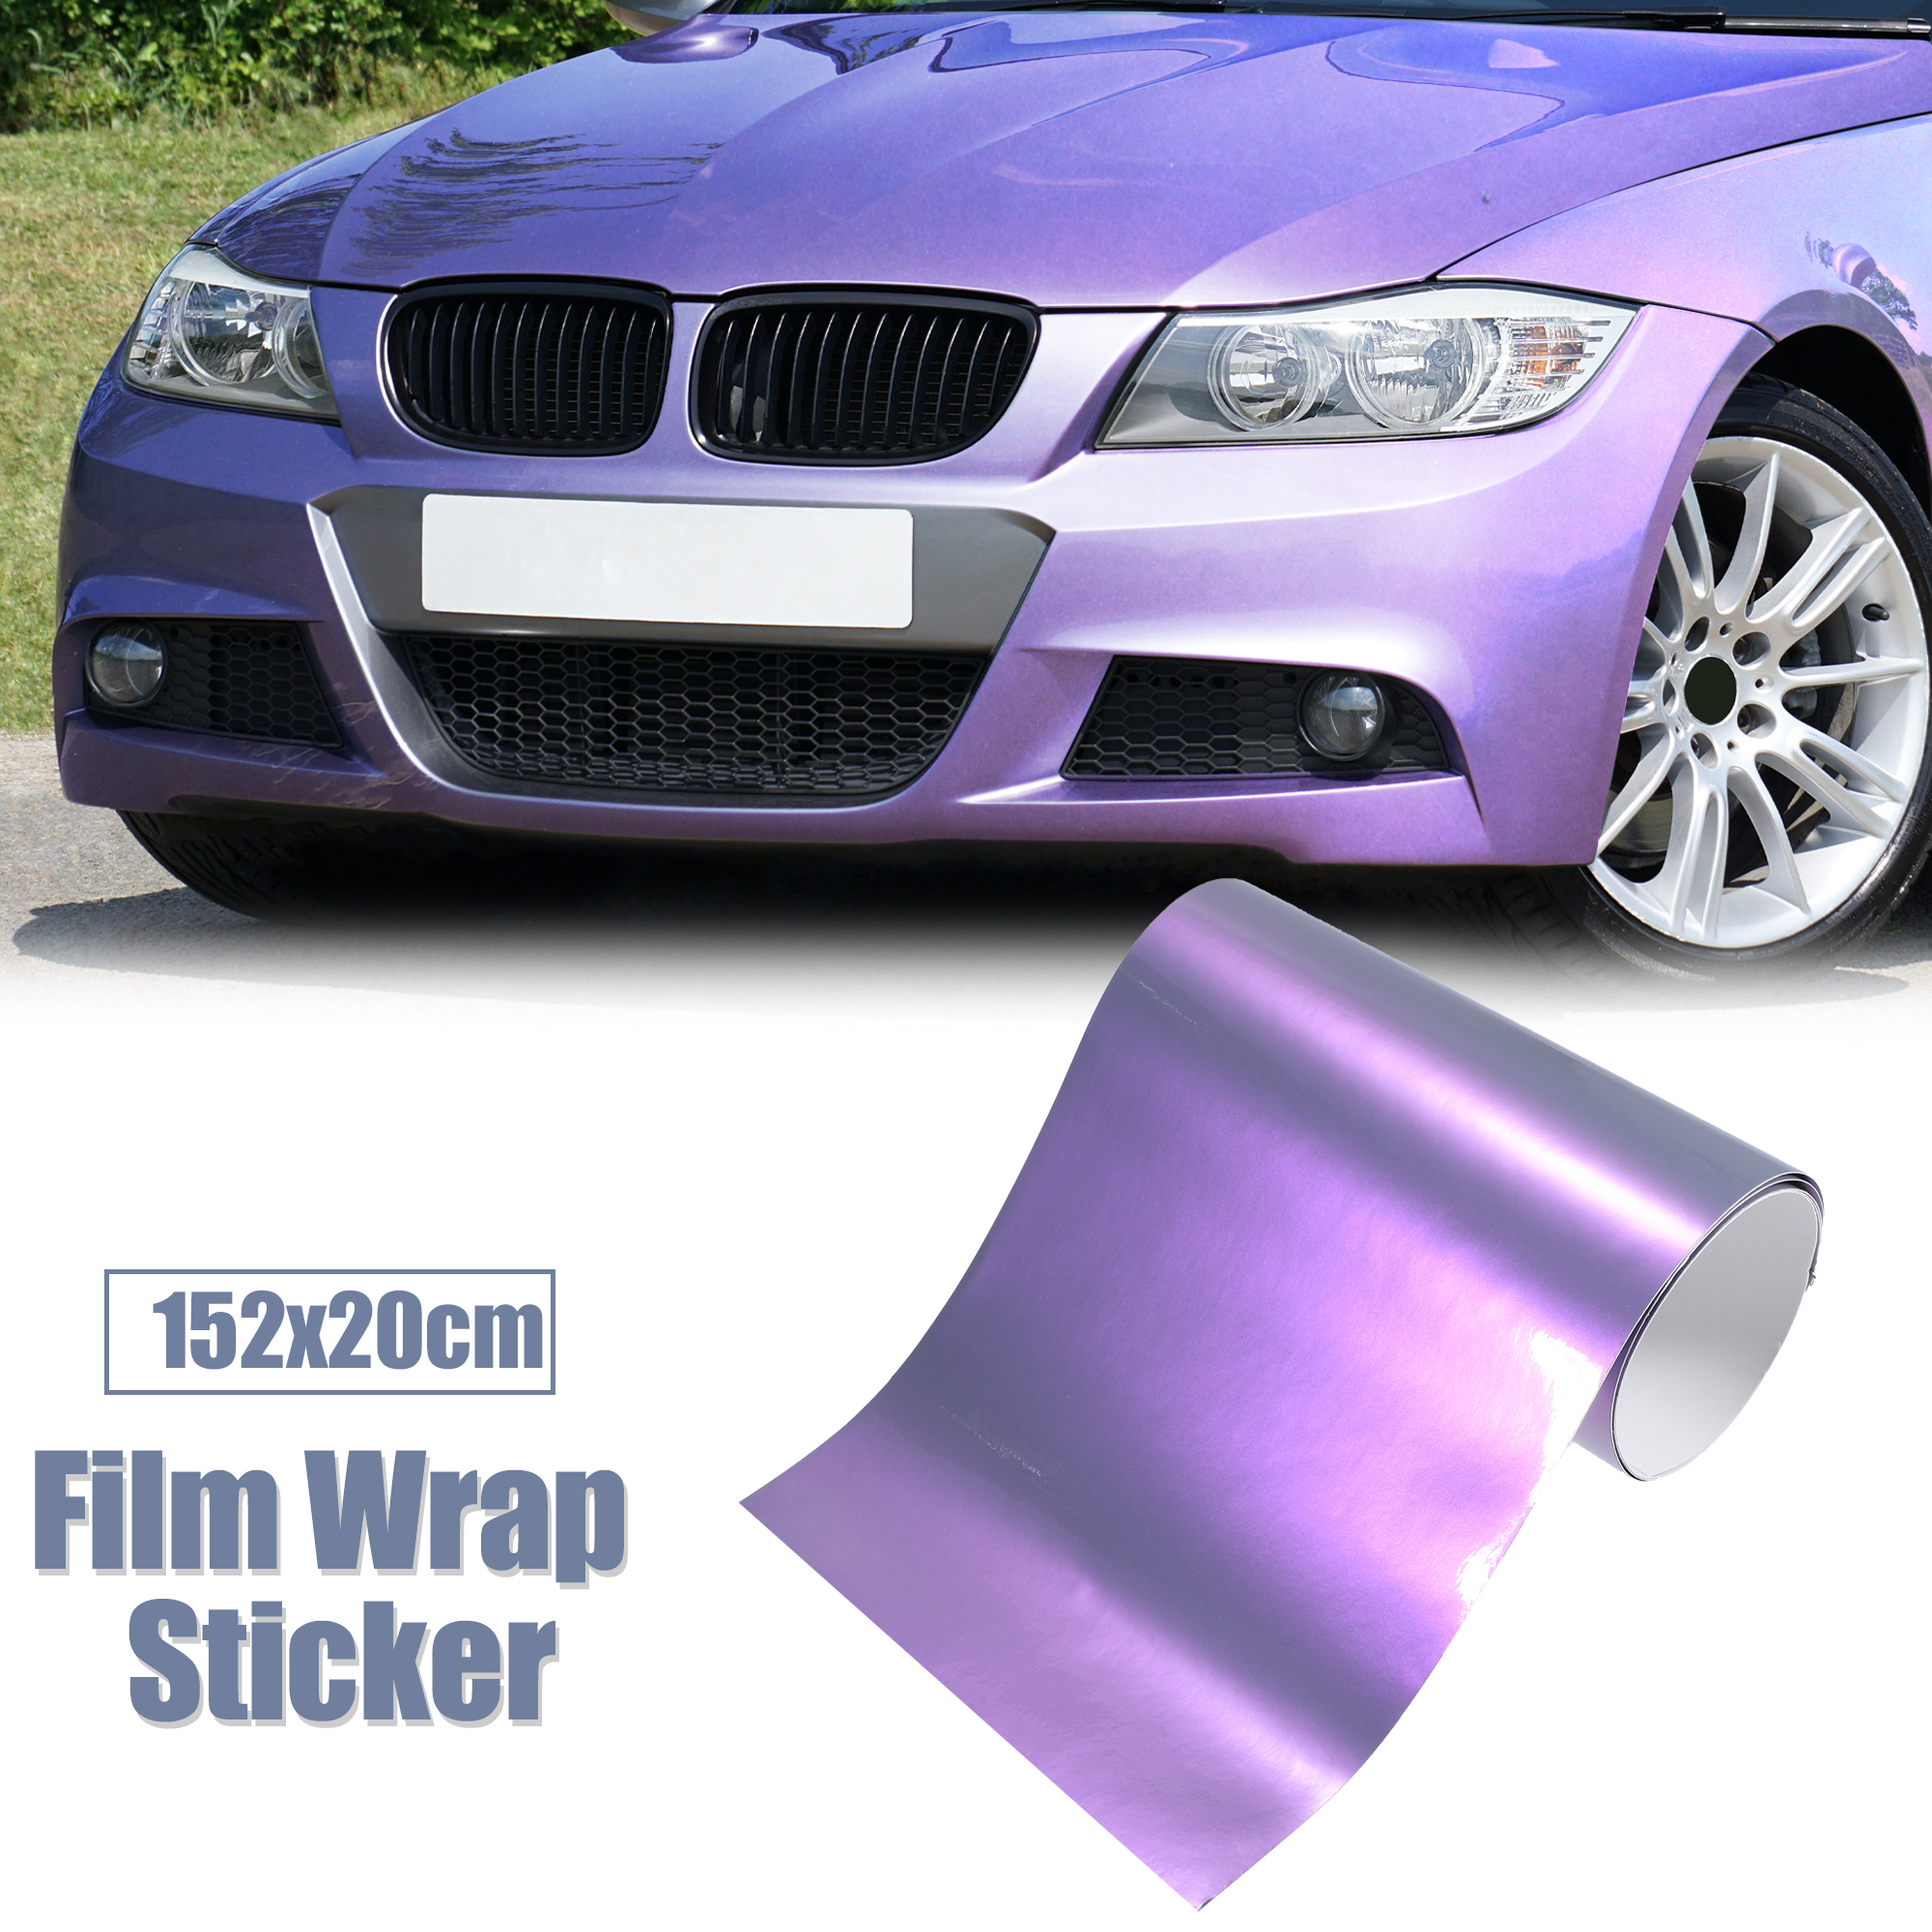 Unique Bargains Car PVC Wrap Roll Sticker Car Body Films Self Adhesive 59.8"x7.87" Gray Purple